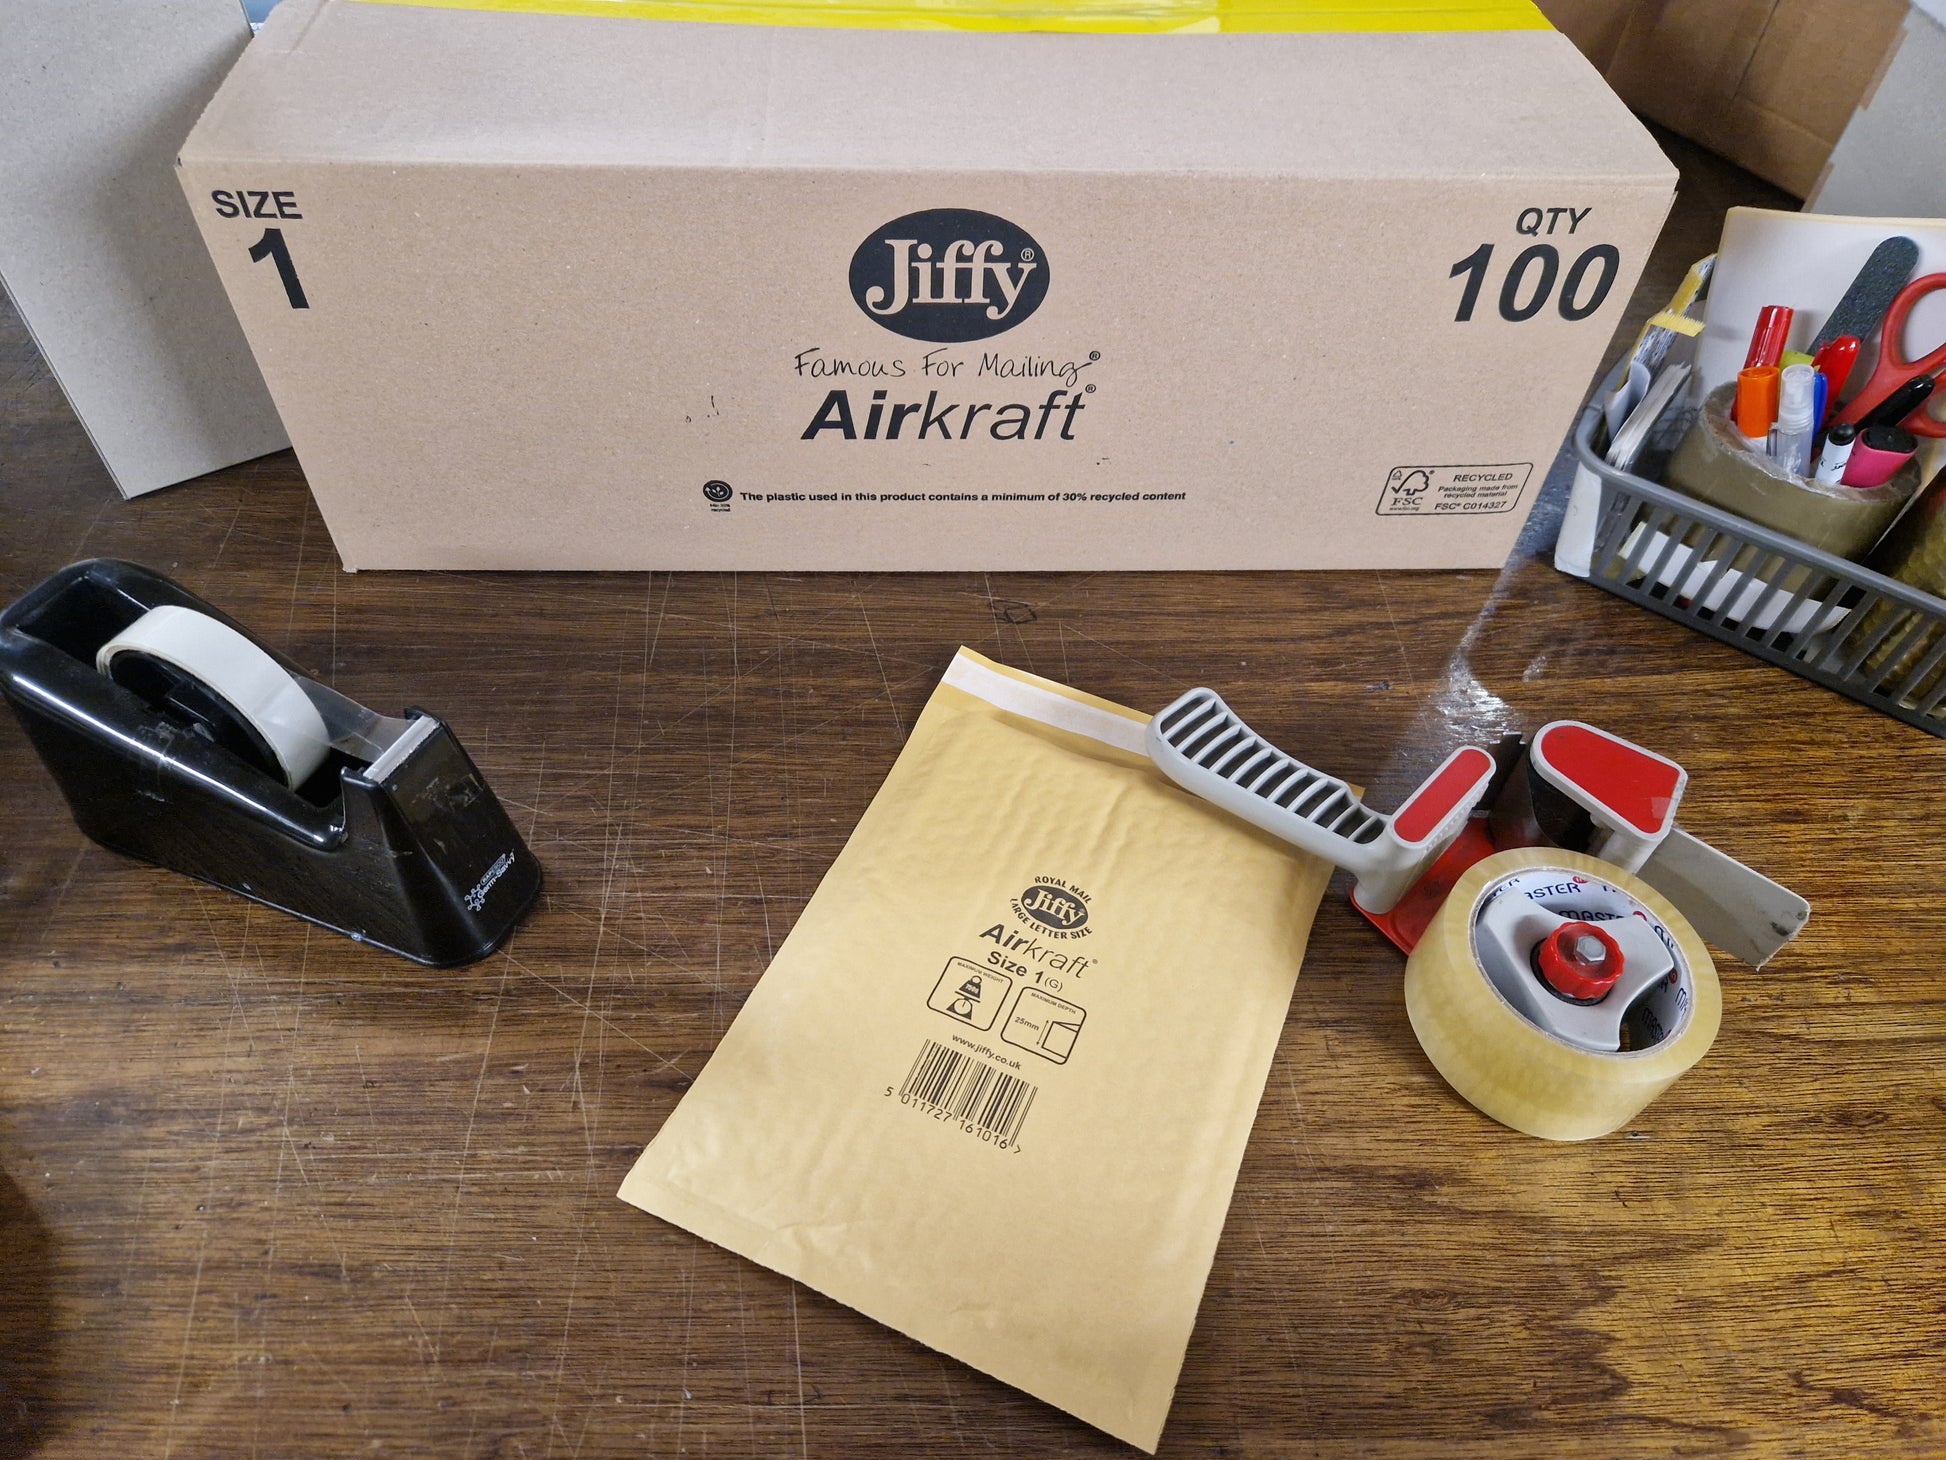 Box of Jiffy Airkraft JL1 from Jiffy Envelopes